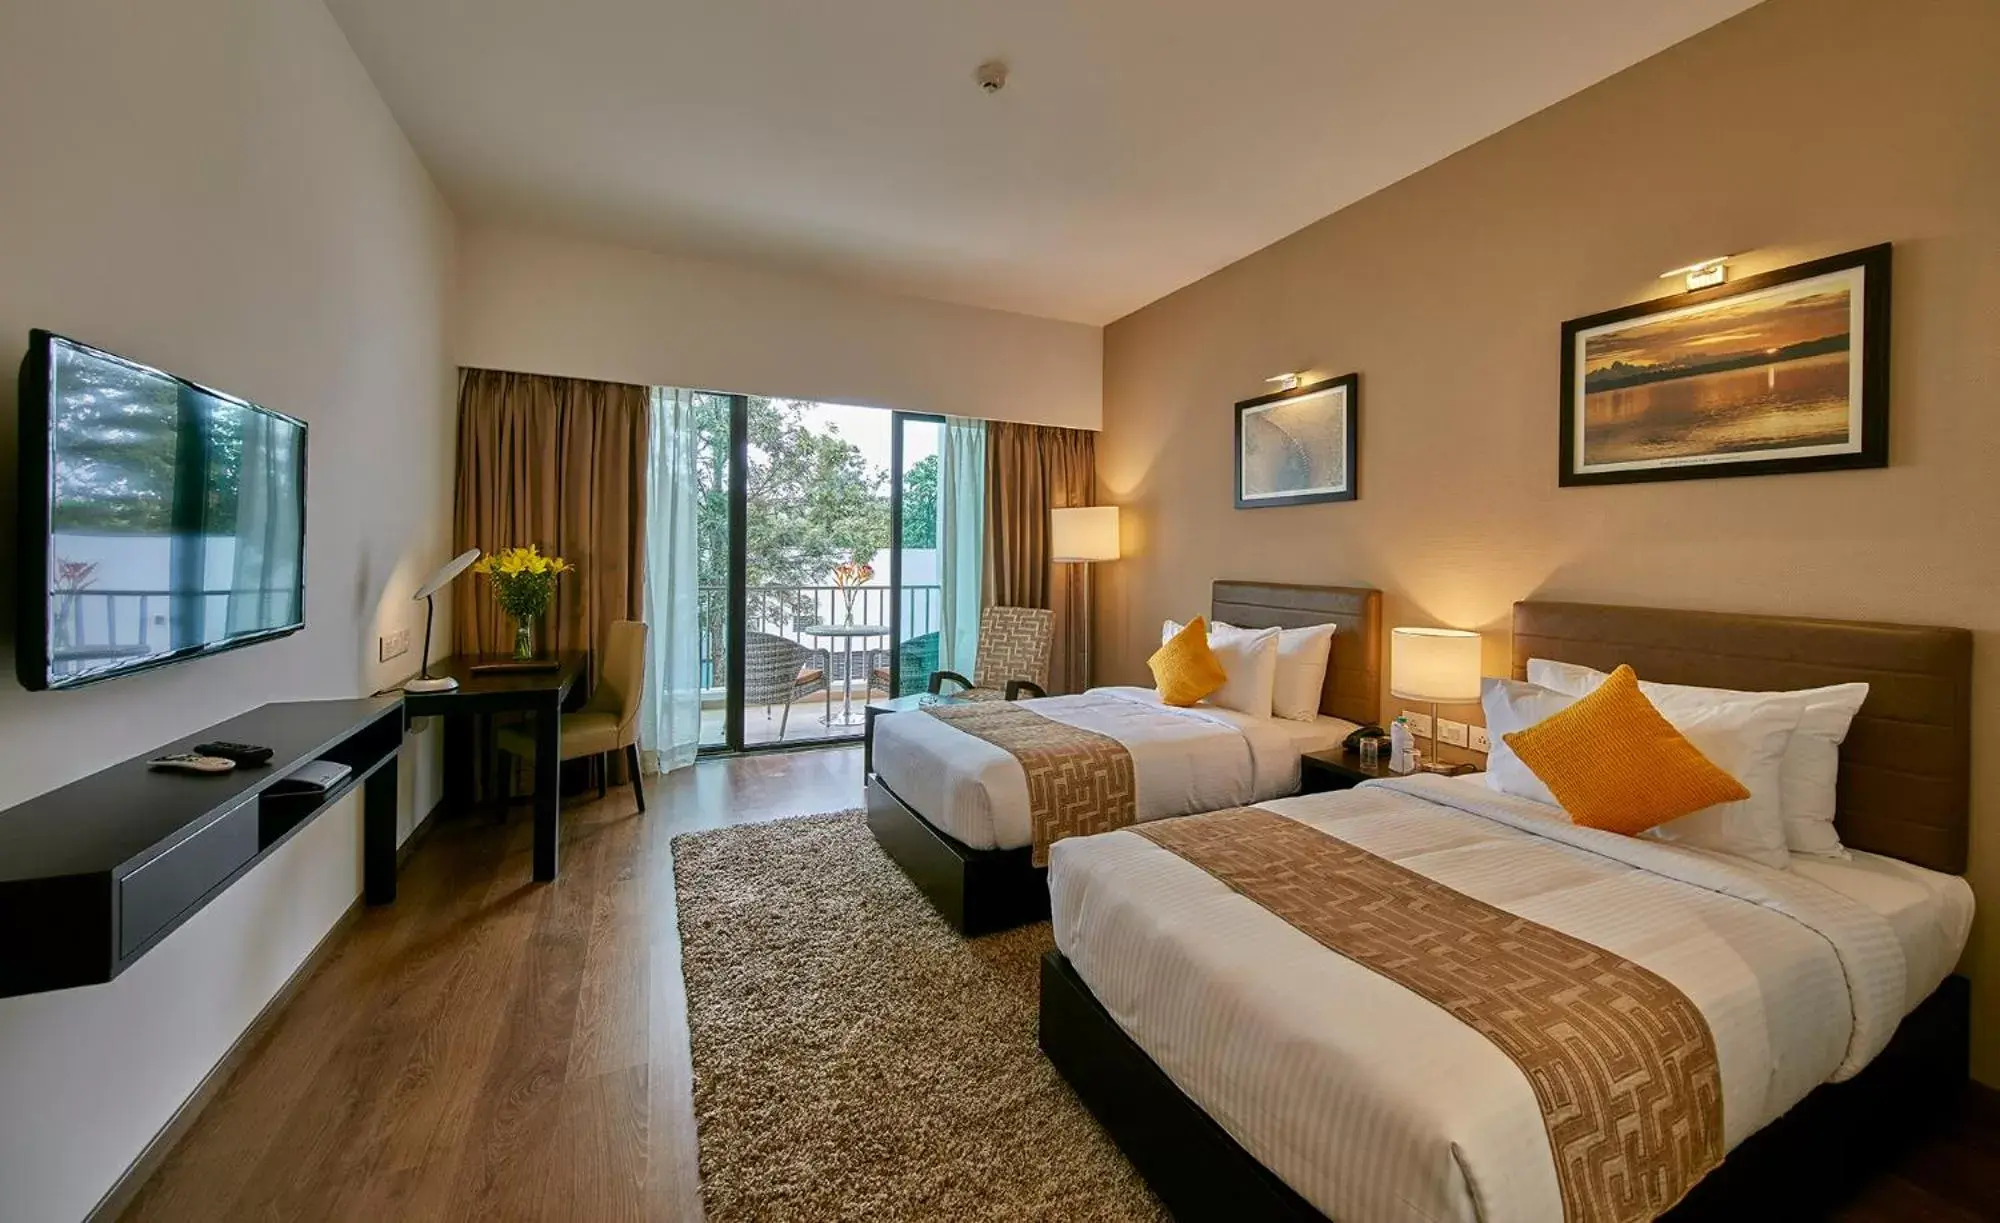 Bed, Room Photo in Signature Club Resort